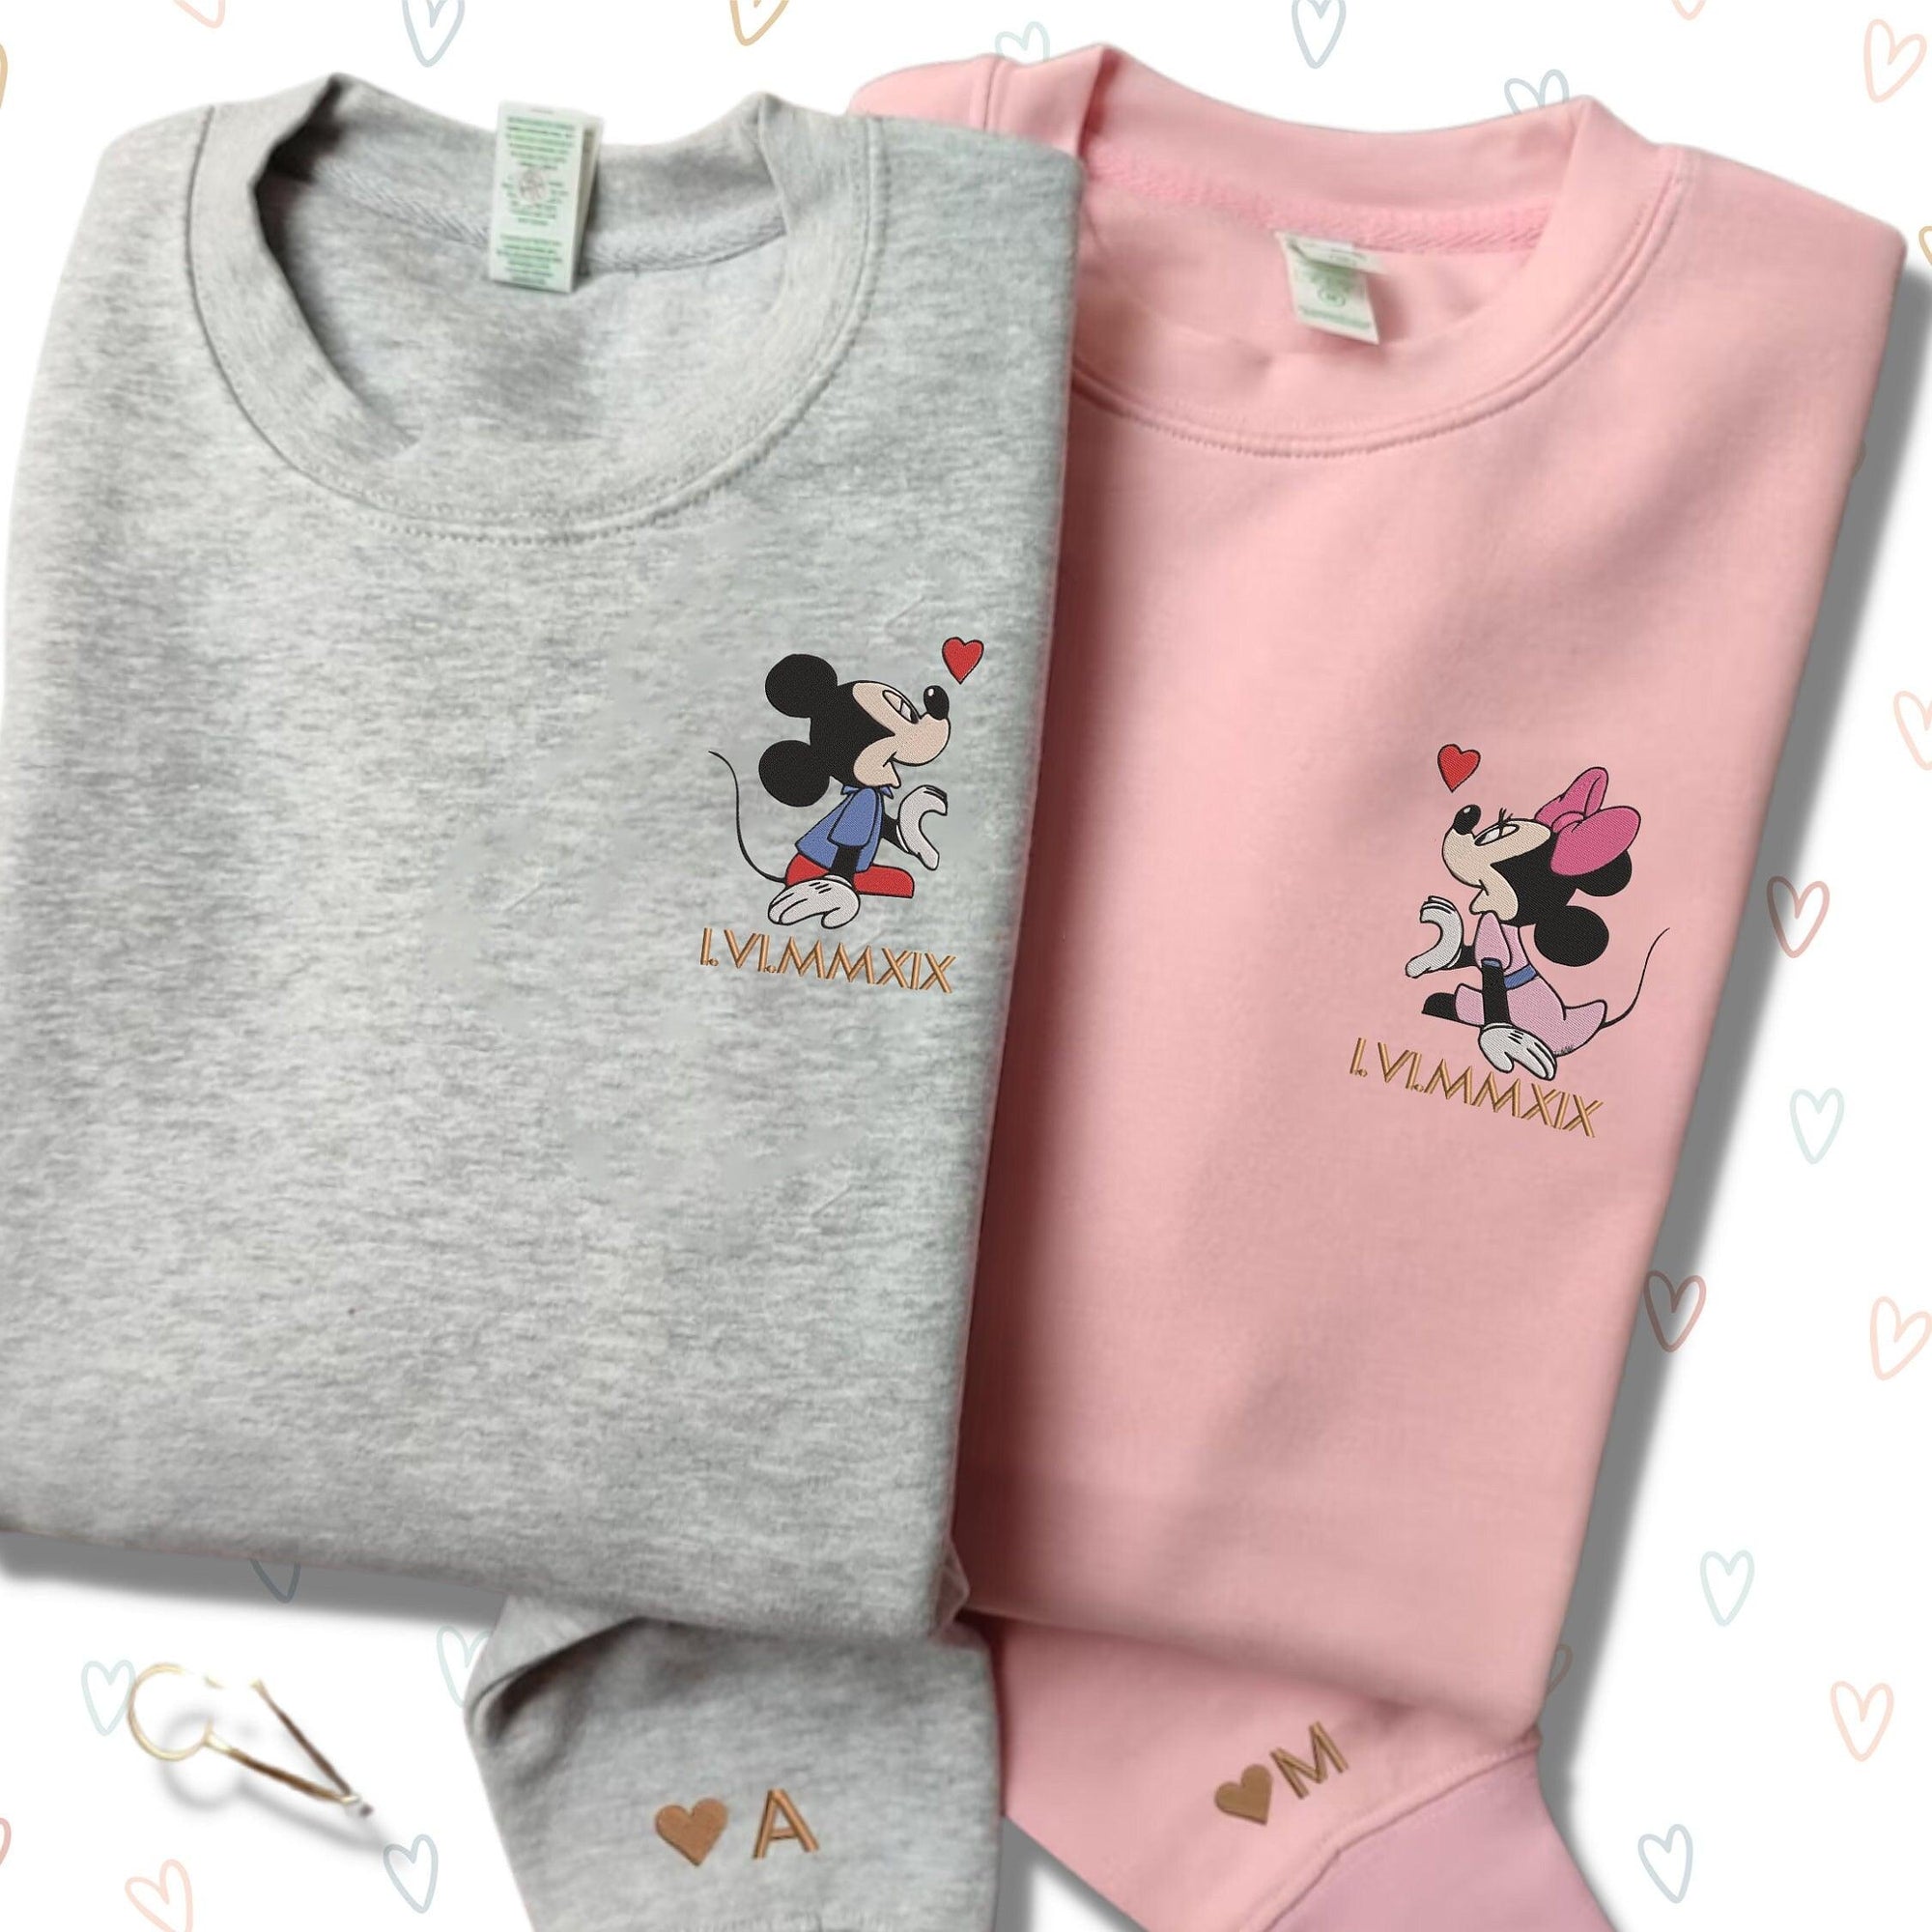 Custom Embroidered Sweatshirts For Couples, Custom Matching Couple Hoodies, Cartoon Mouse Heart Roman Numeral Date Embroidered Matching Couples Sweatshirt